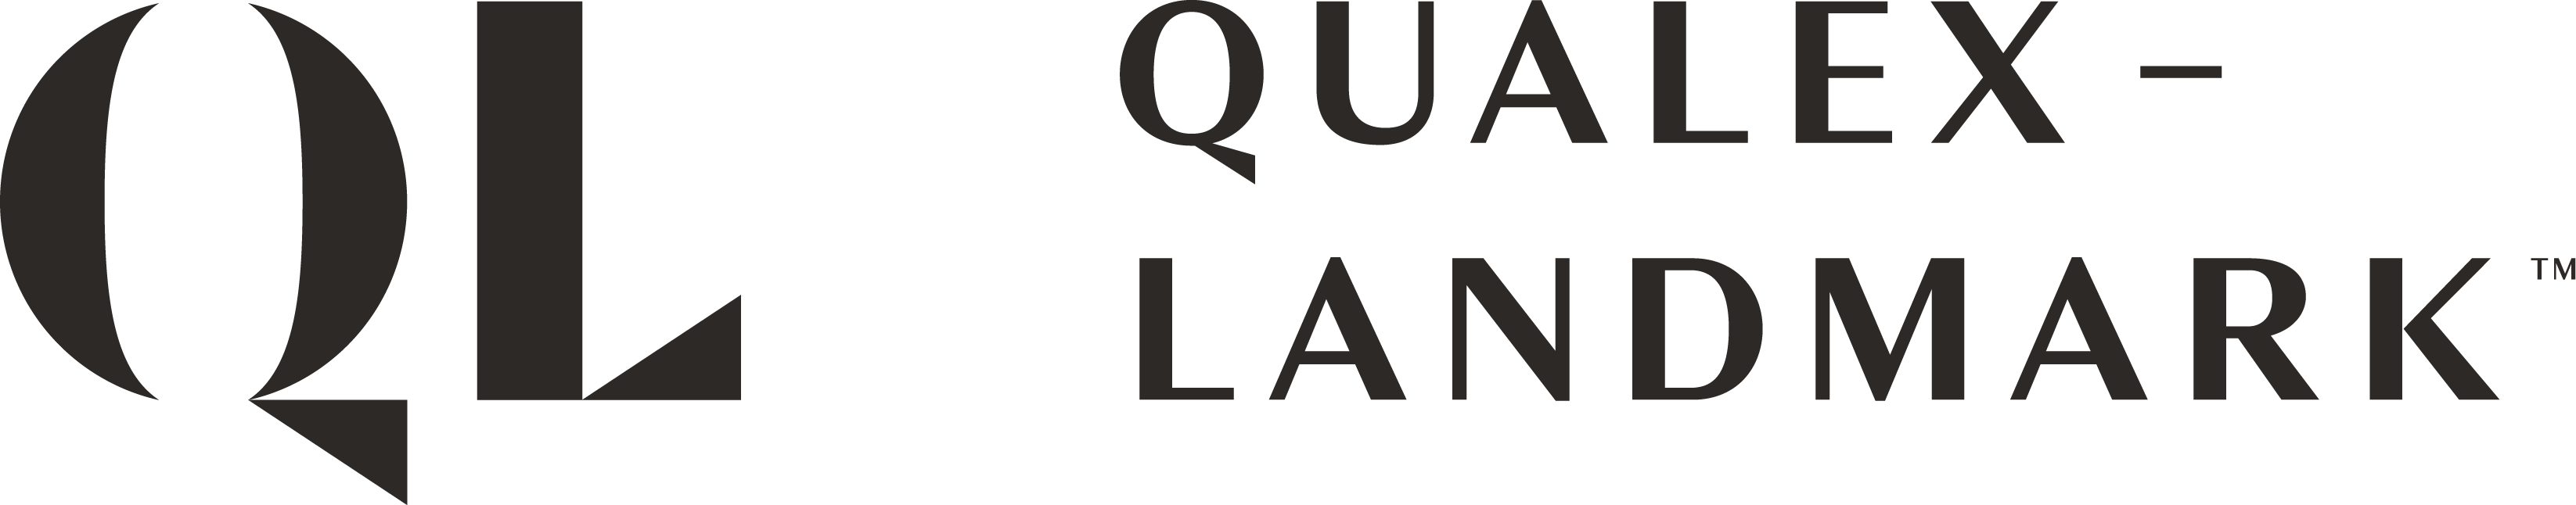 Qualex-Landmark - Logo